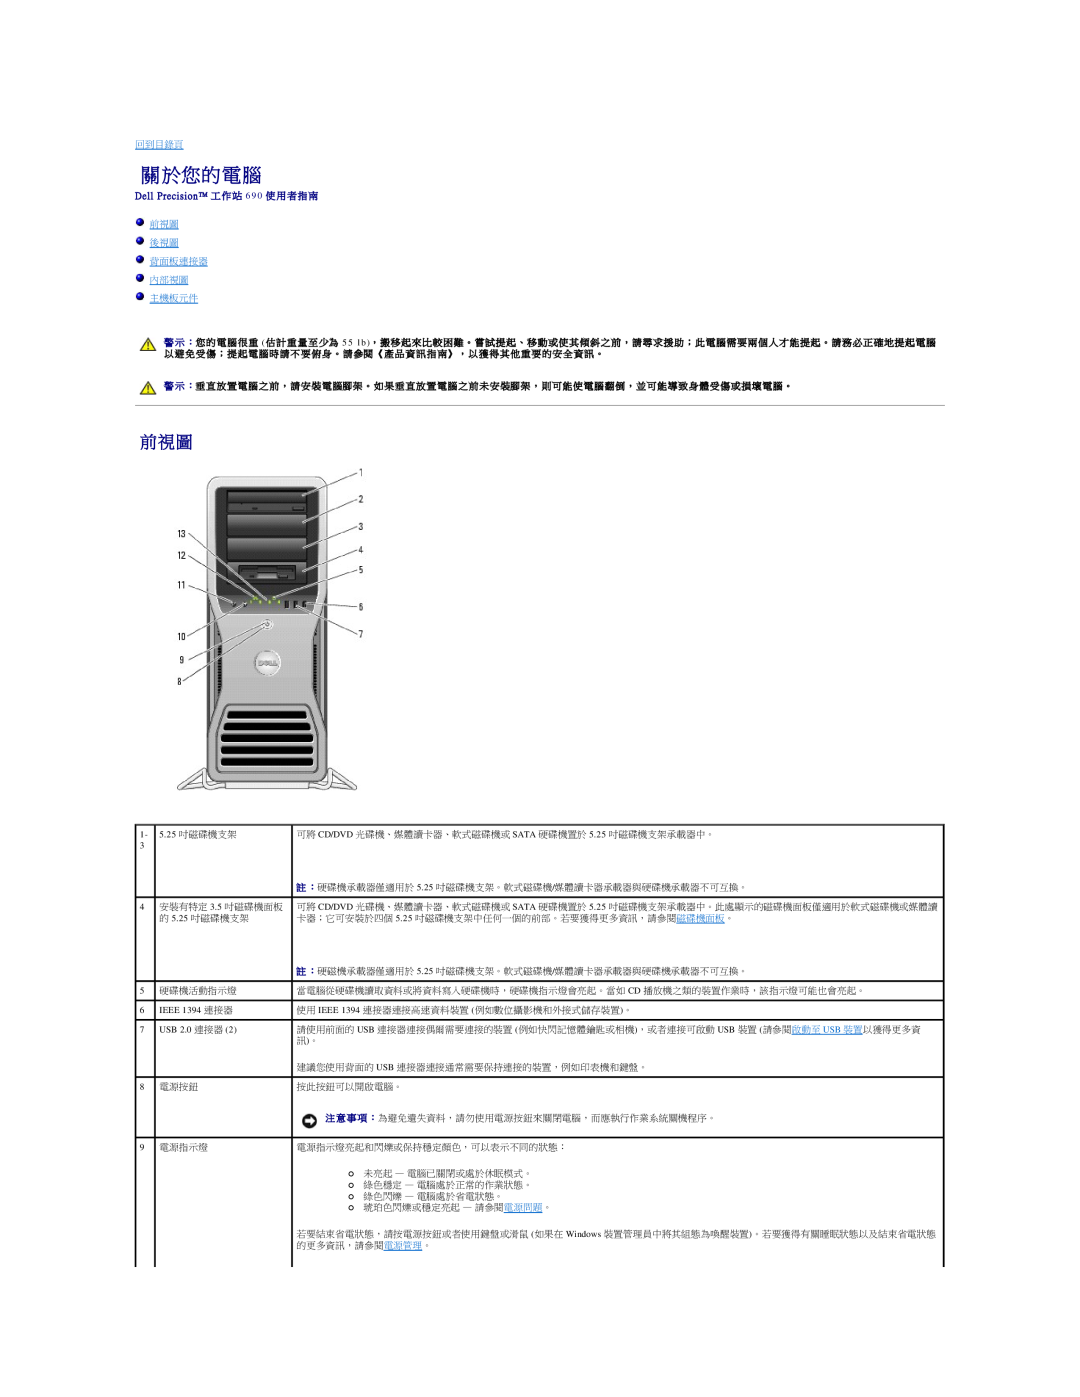 Dell 690 manual 關 於您的 電 腦, 前 視 圖, D e l l P r e c i s i o n 工 作 站 6 9 0 使 用 者 指 南 